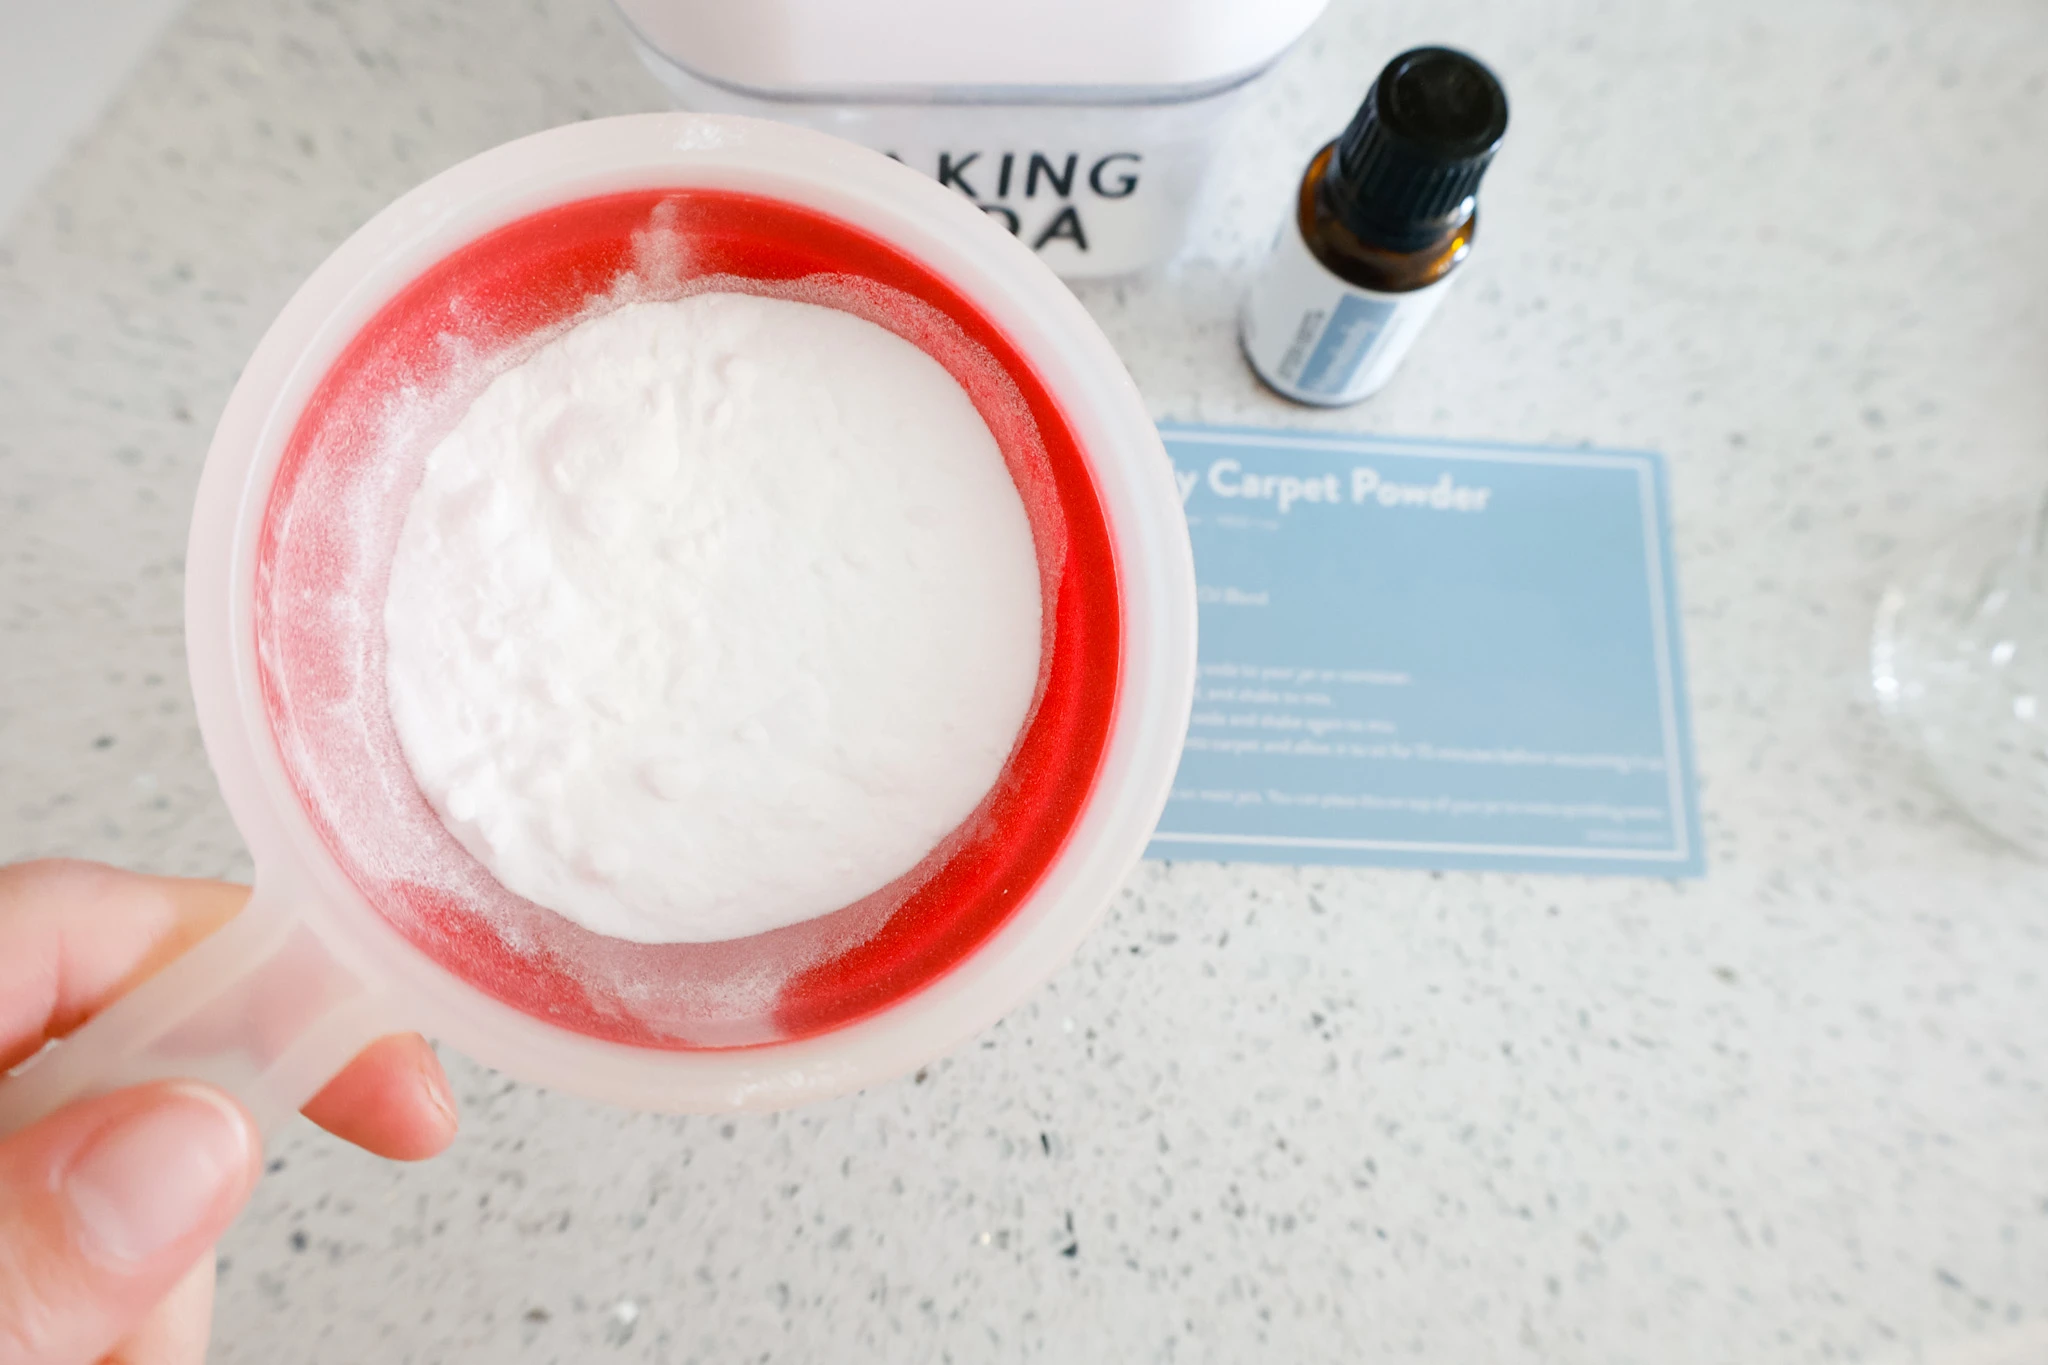 baking soda in measuring cup for carpet powder recipe